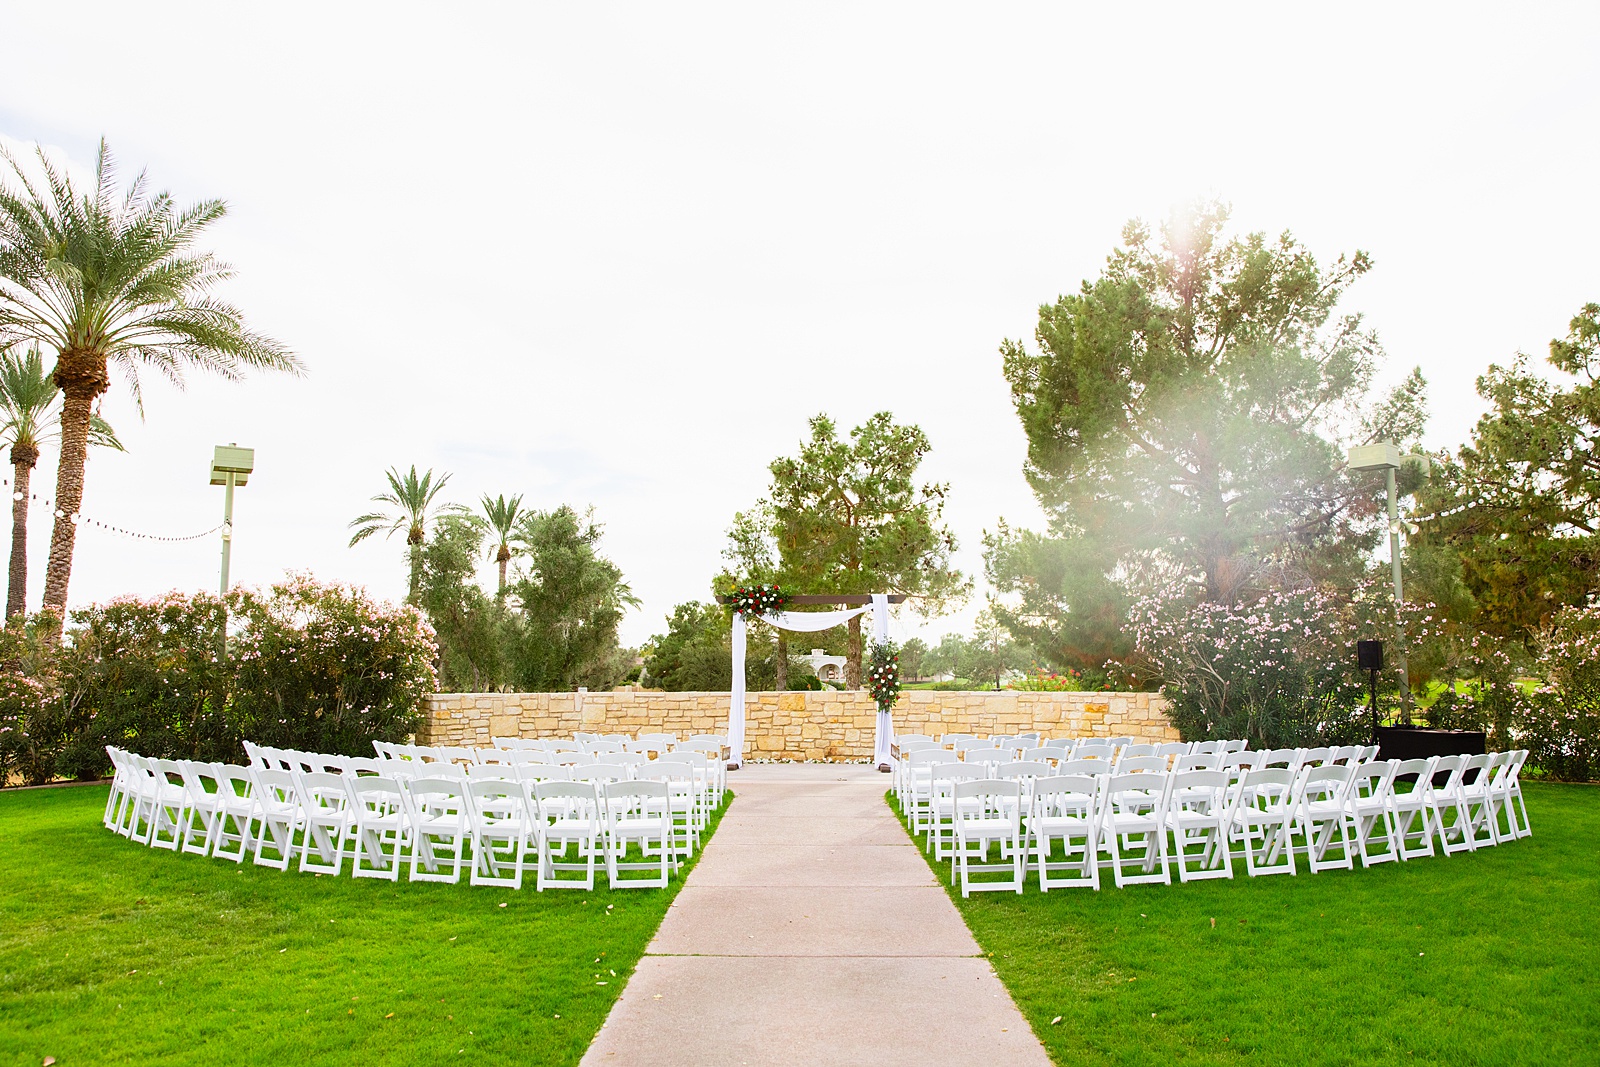 Outdoor wedding ceremony at Ocotillo Oasis by Phoenix wedding photographer PMA Photography.